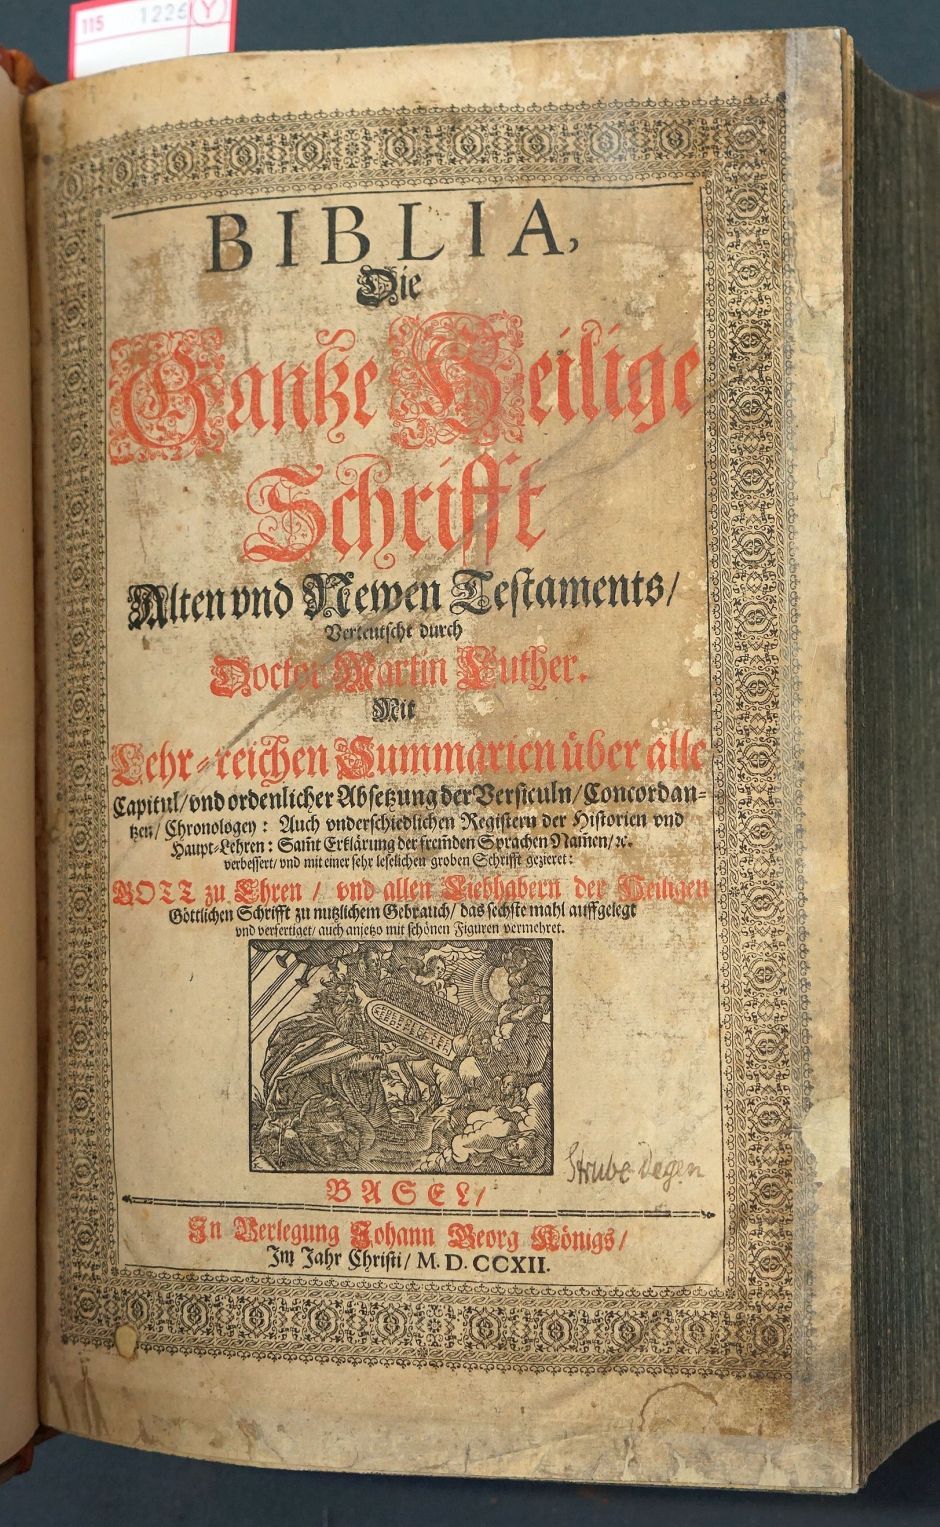 Lot 1226, Auction  115, Biblia germanica, Biblia